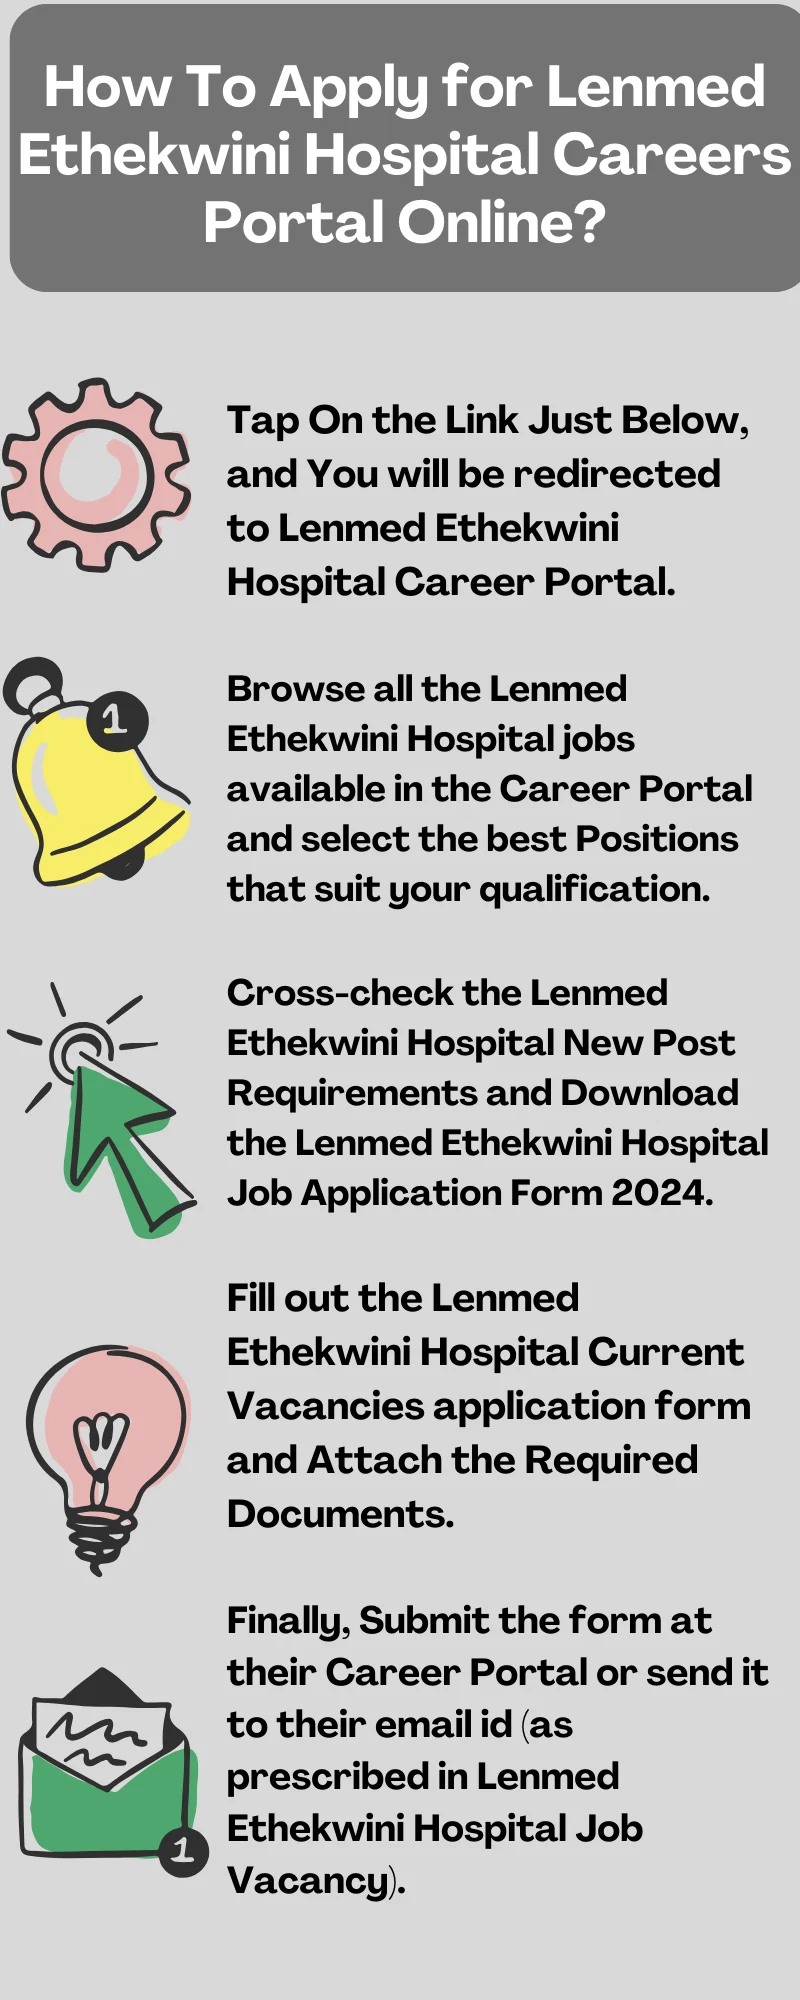 How To Apply for Lenmed Ethekwini Hospital Careers Portal Online?